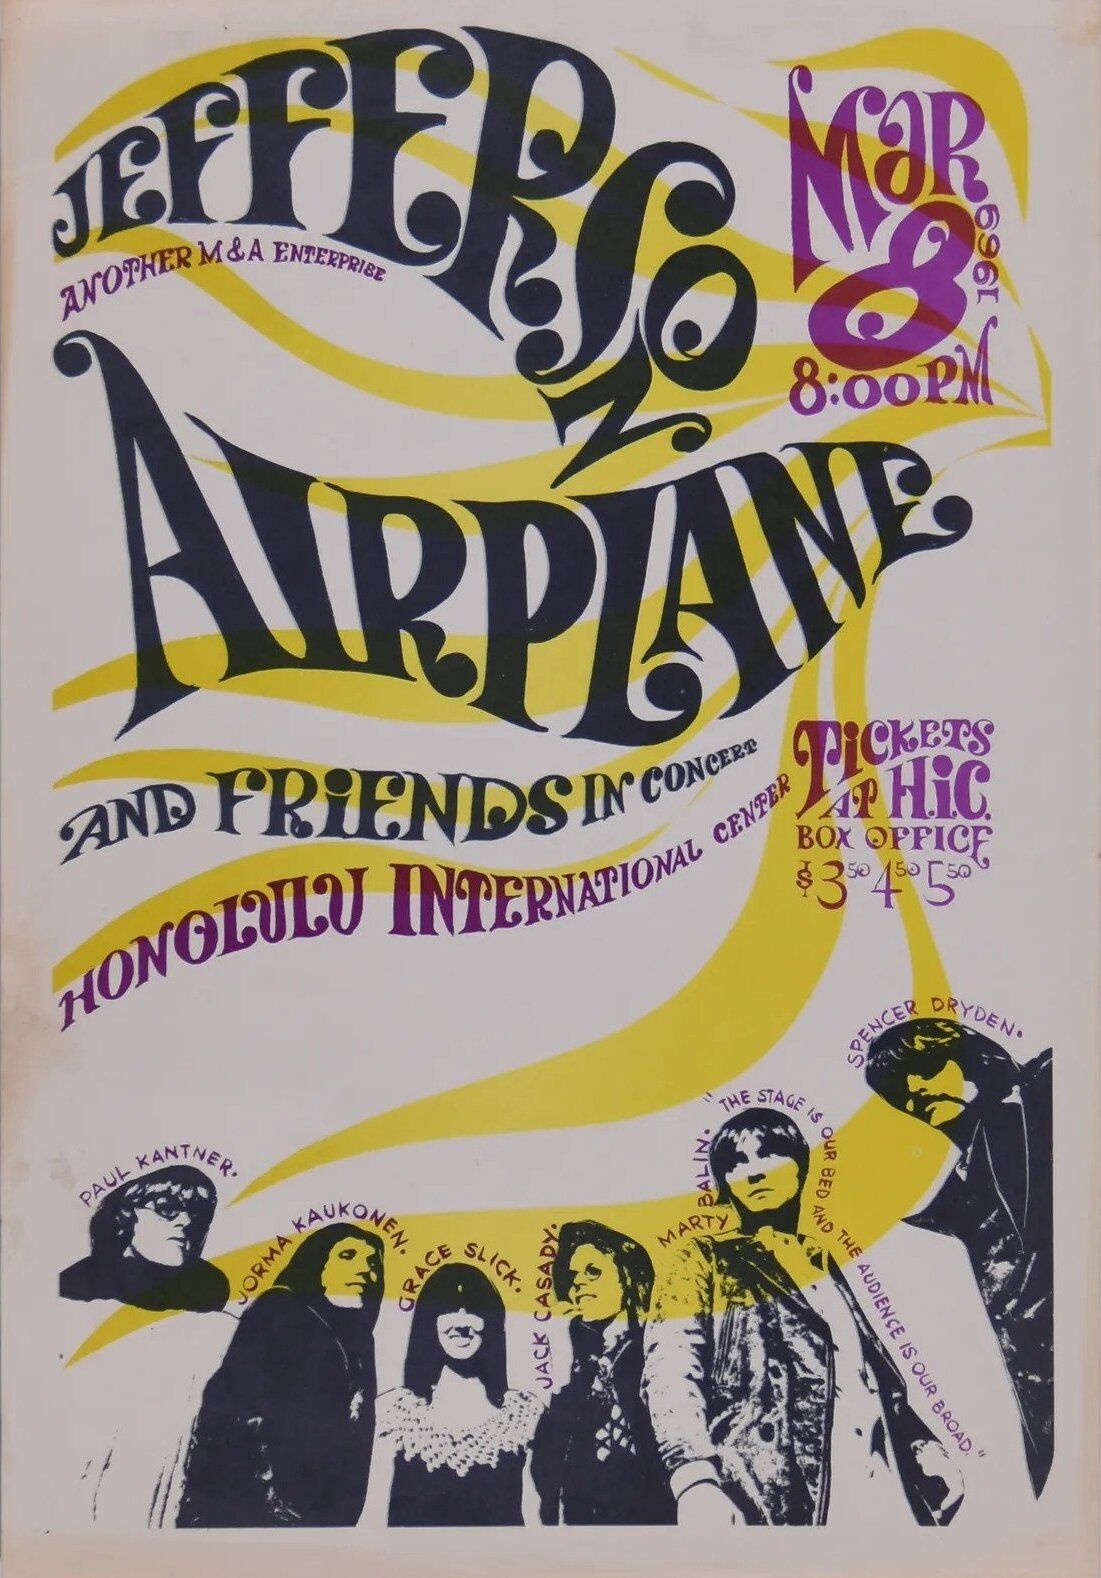 Jefferson Airplane Honolulu International Center 1969 Concert Poster